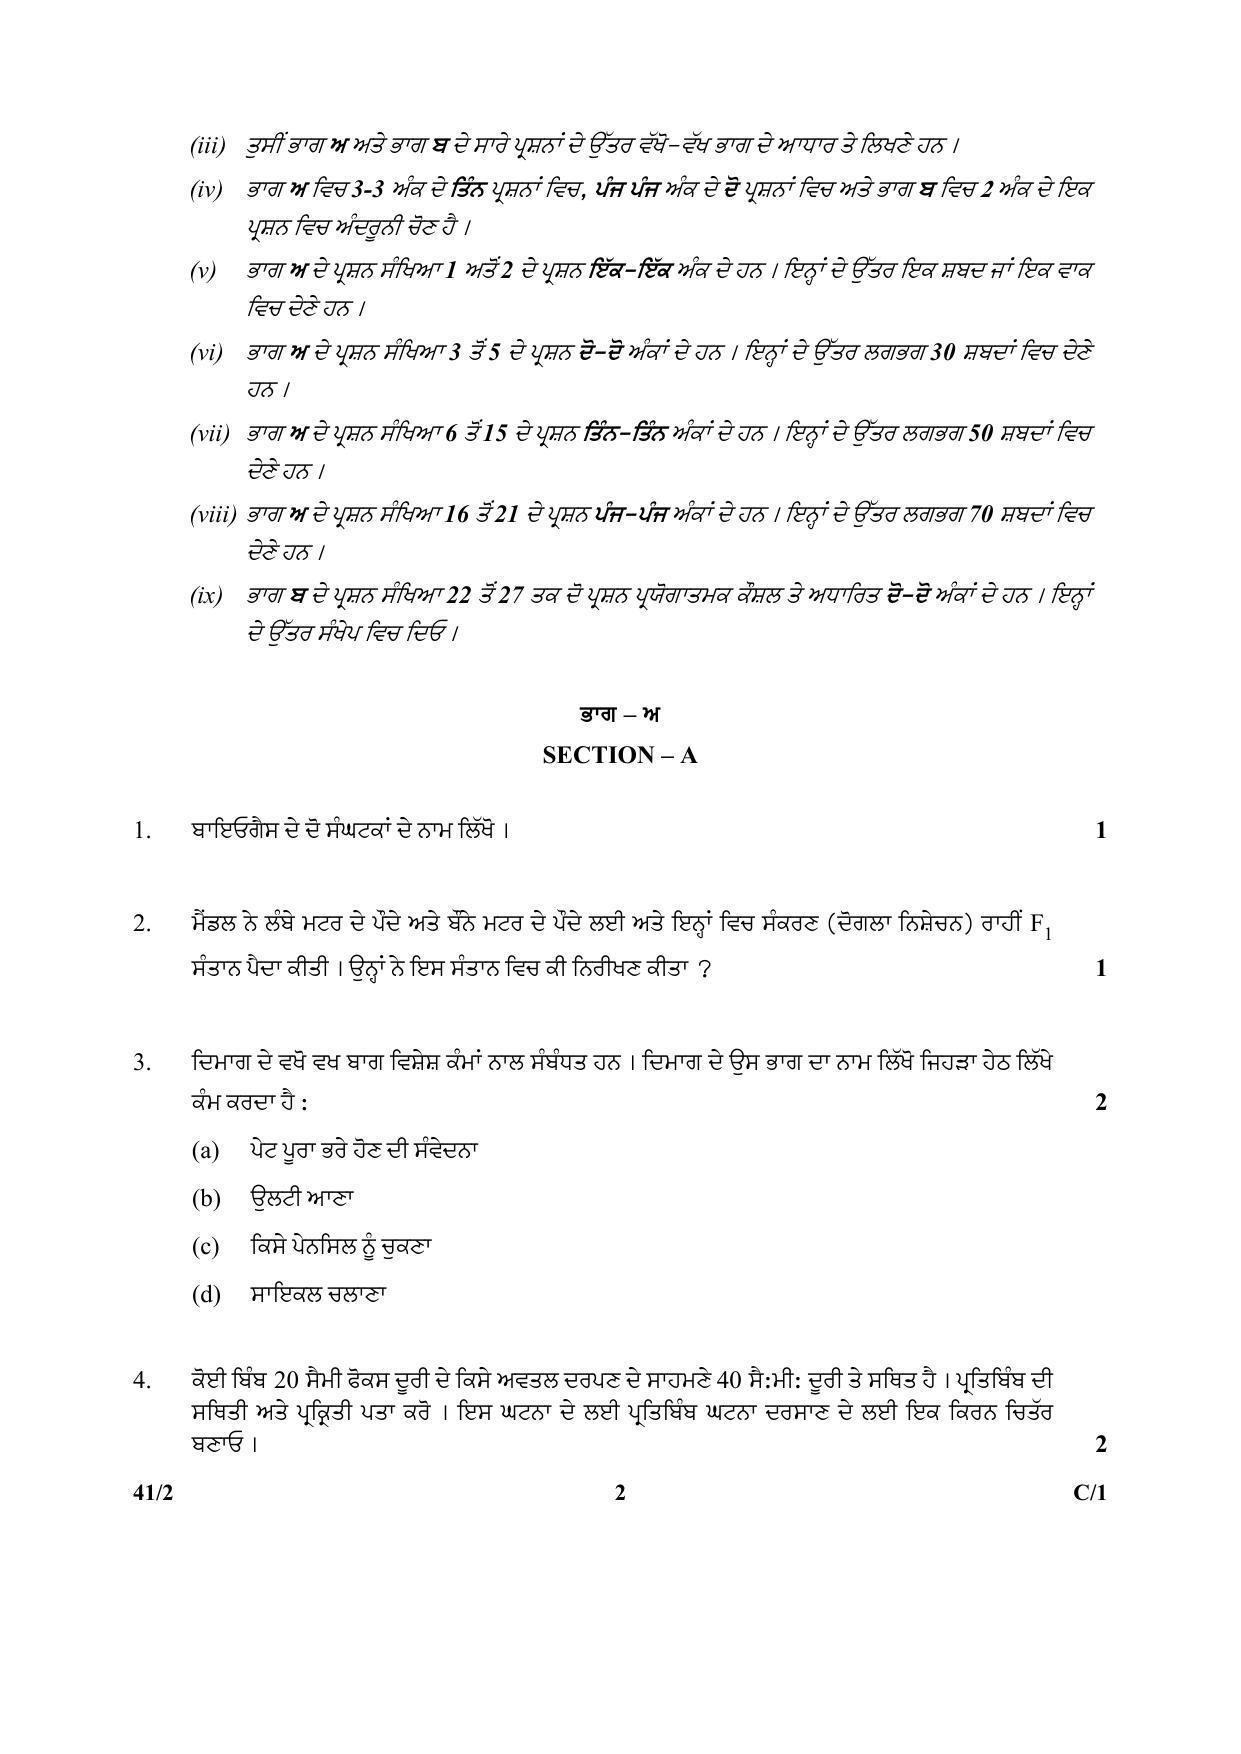 CBSE Class 10 41-2 Science PUNJABI VERSION 2018 Compartment Question Paper - Page 2